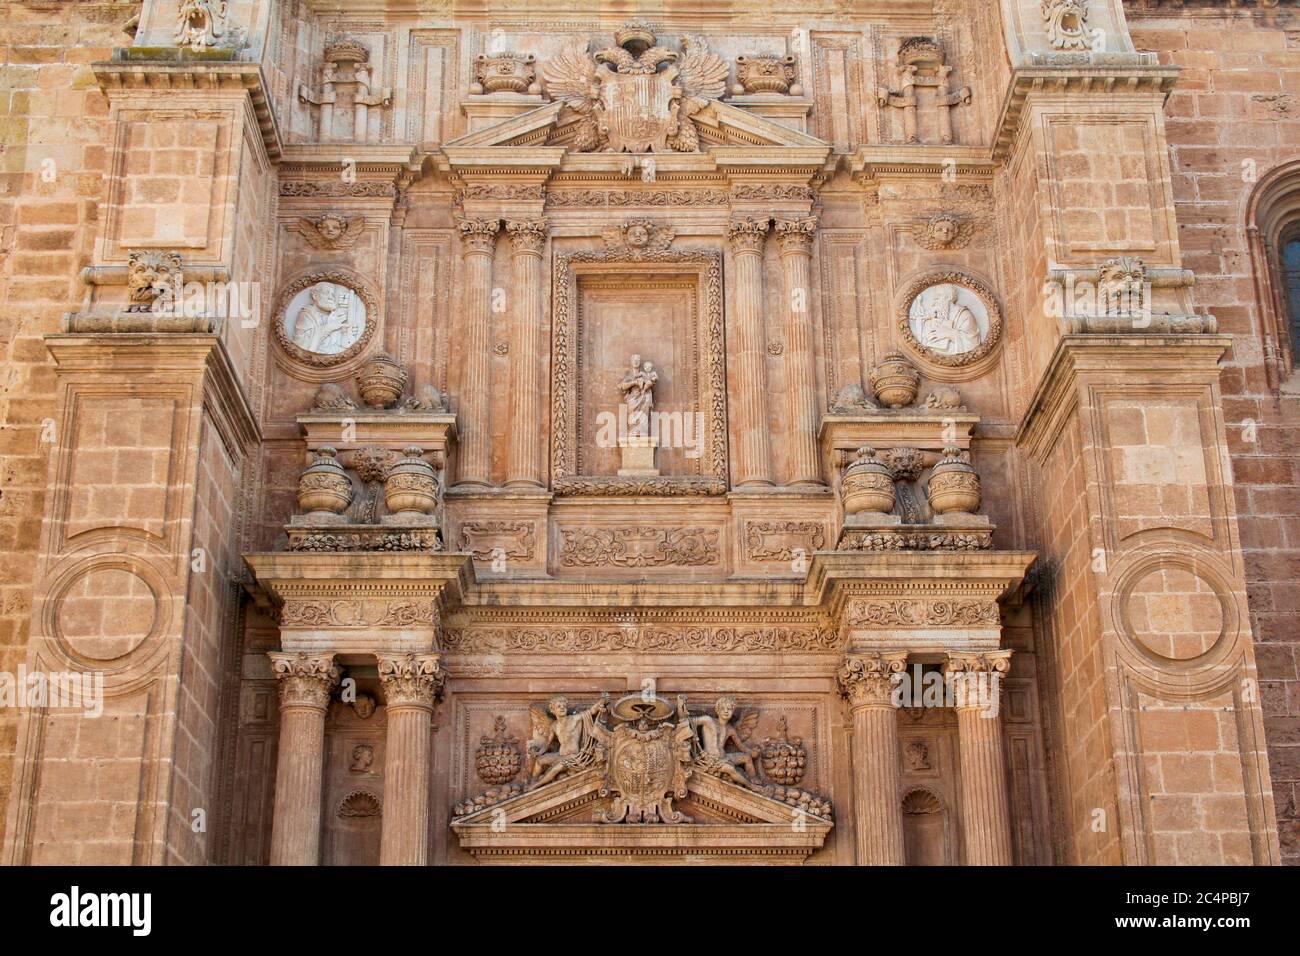 Almería, Andalusia, Spain, Europe.. Catedral de santa María de la Encarnación (Cathedral of Saint Mary of the Incarnation). Juan de Orea (1525-1581). Facade of the Cathedral of Almeria - XVI century - Spanish Renaissance. Stock Photo